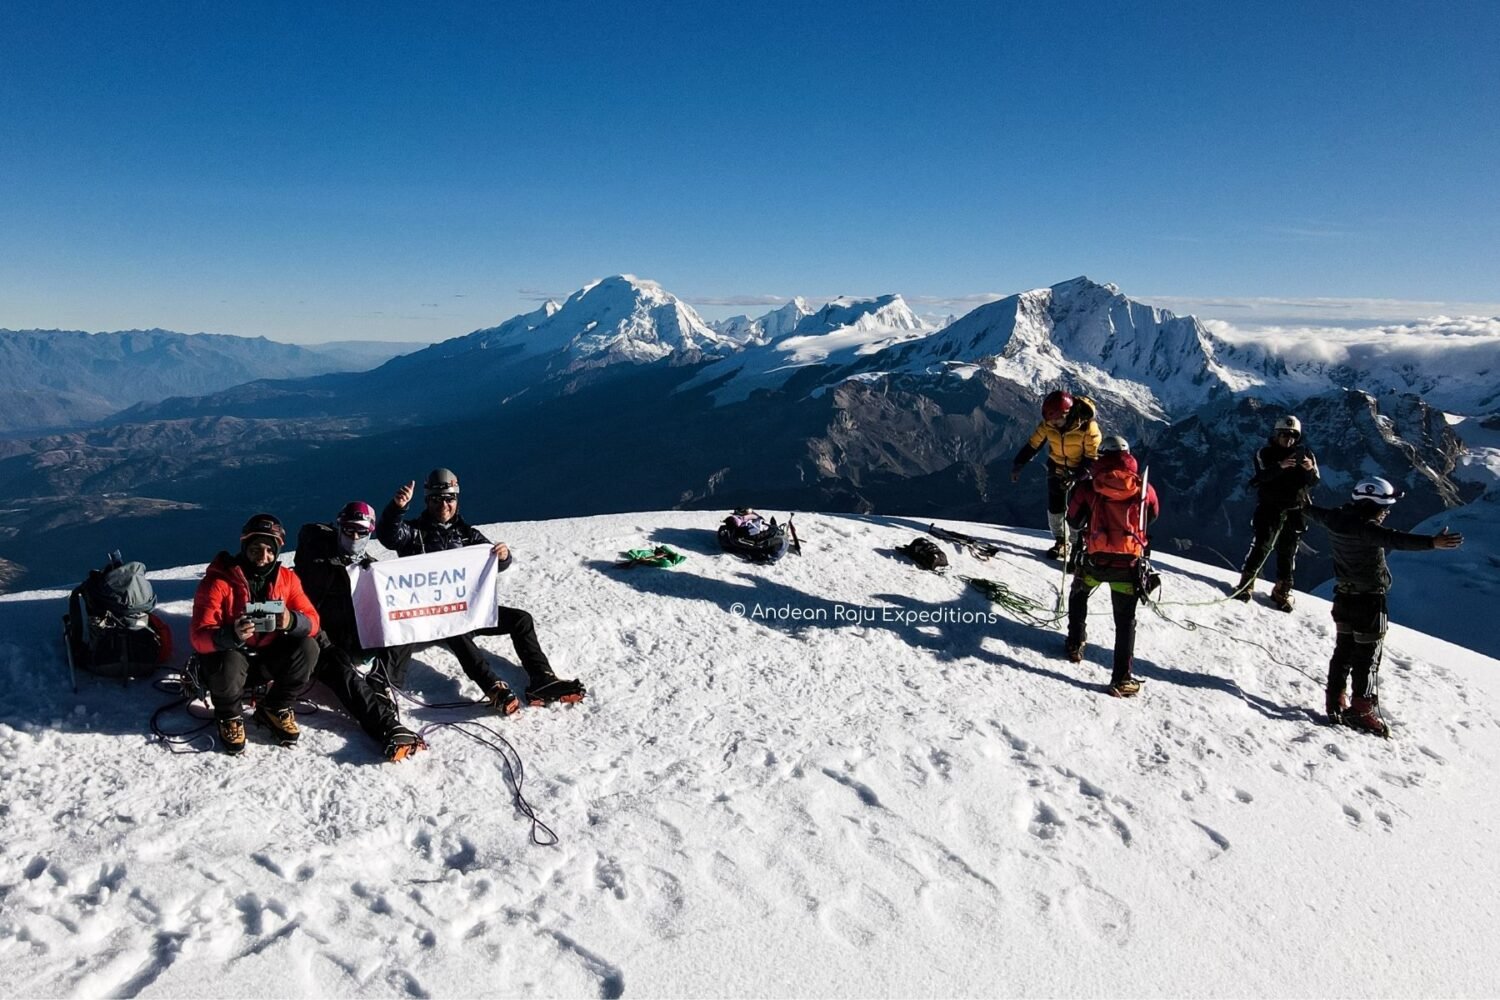 Our Peruvian group on the summit of Nevado Vallunaraju